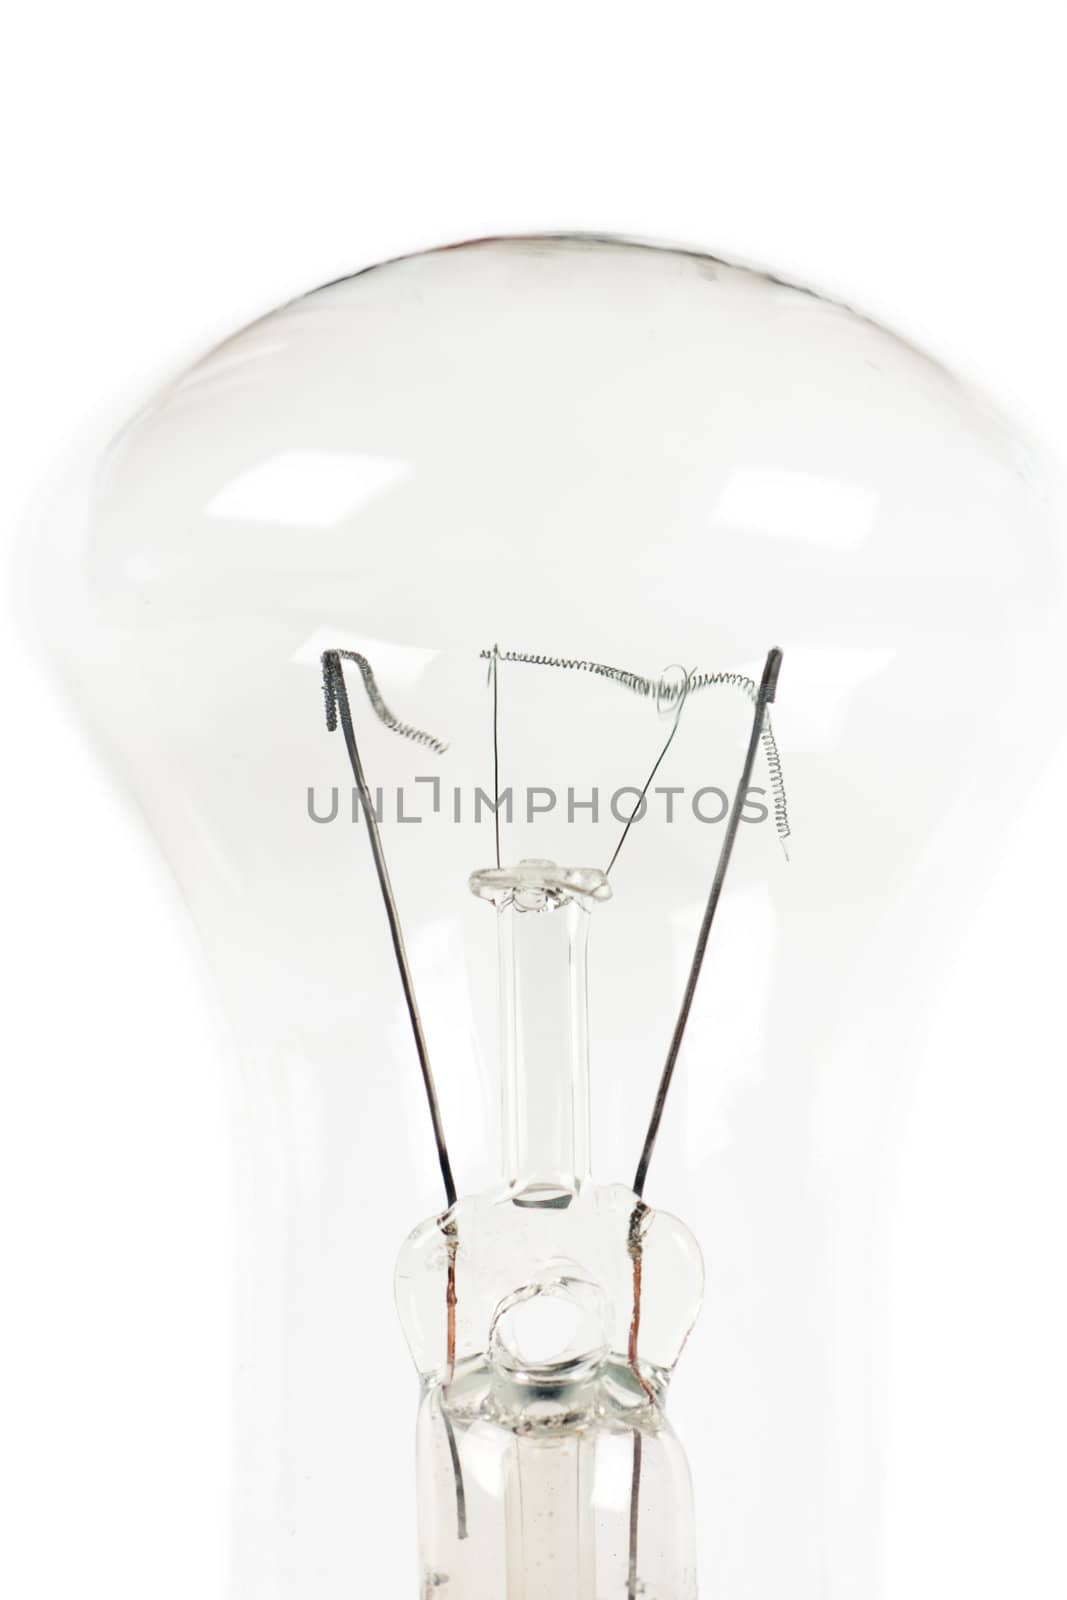 Macro view of a bulb of fused lamp